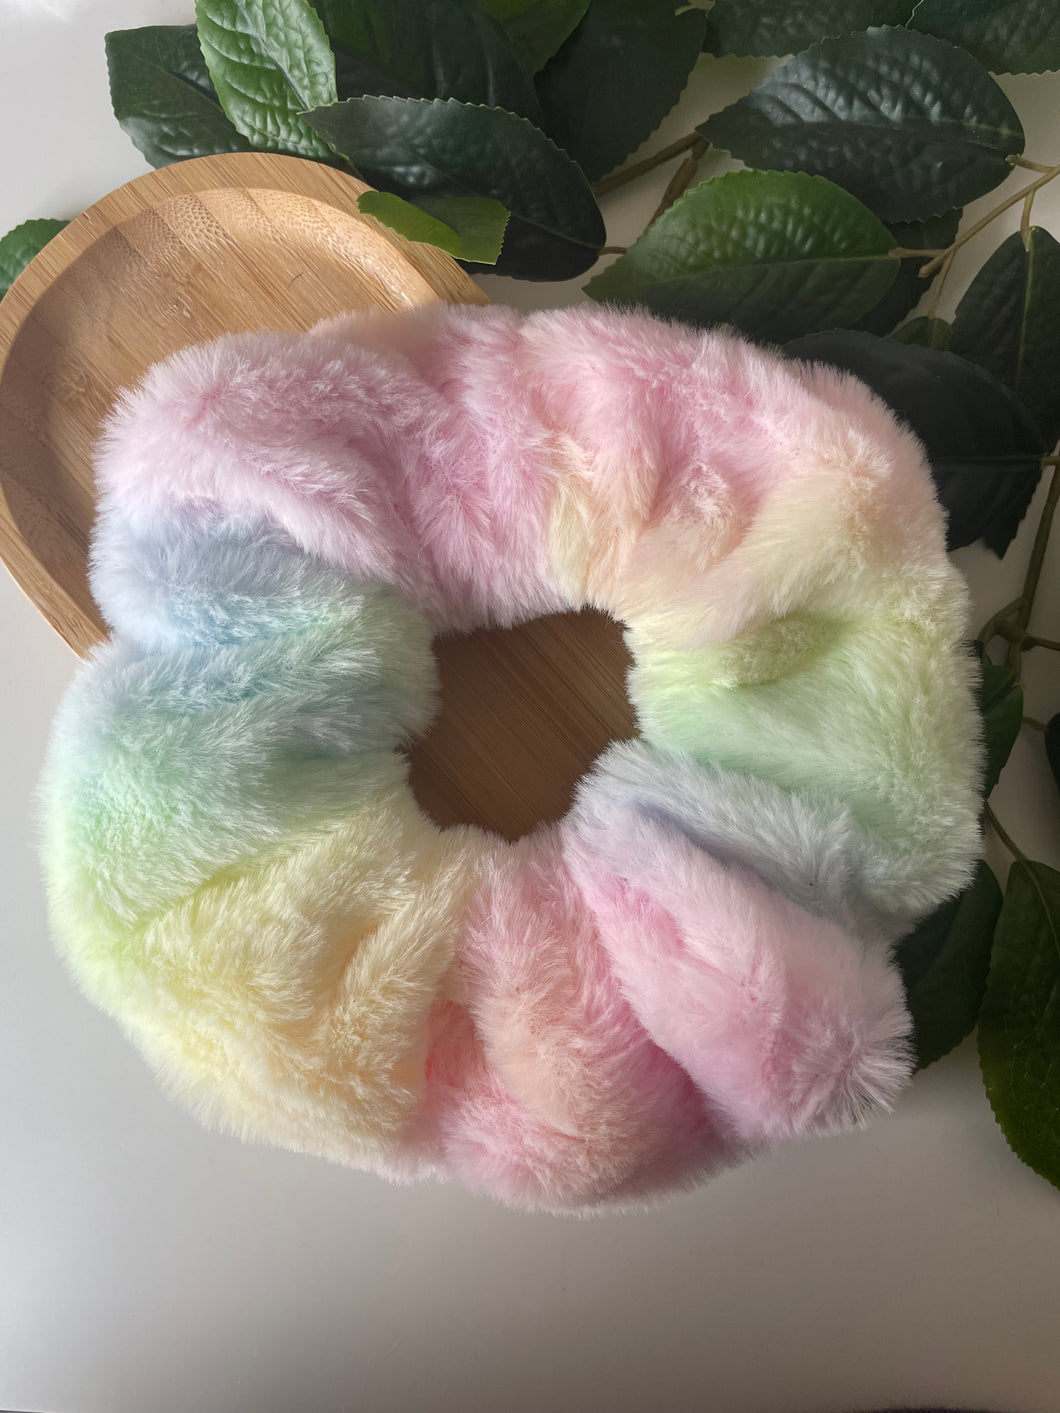 Jumbo cotton candy scrunchie